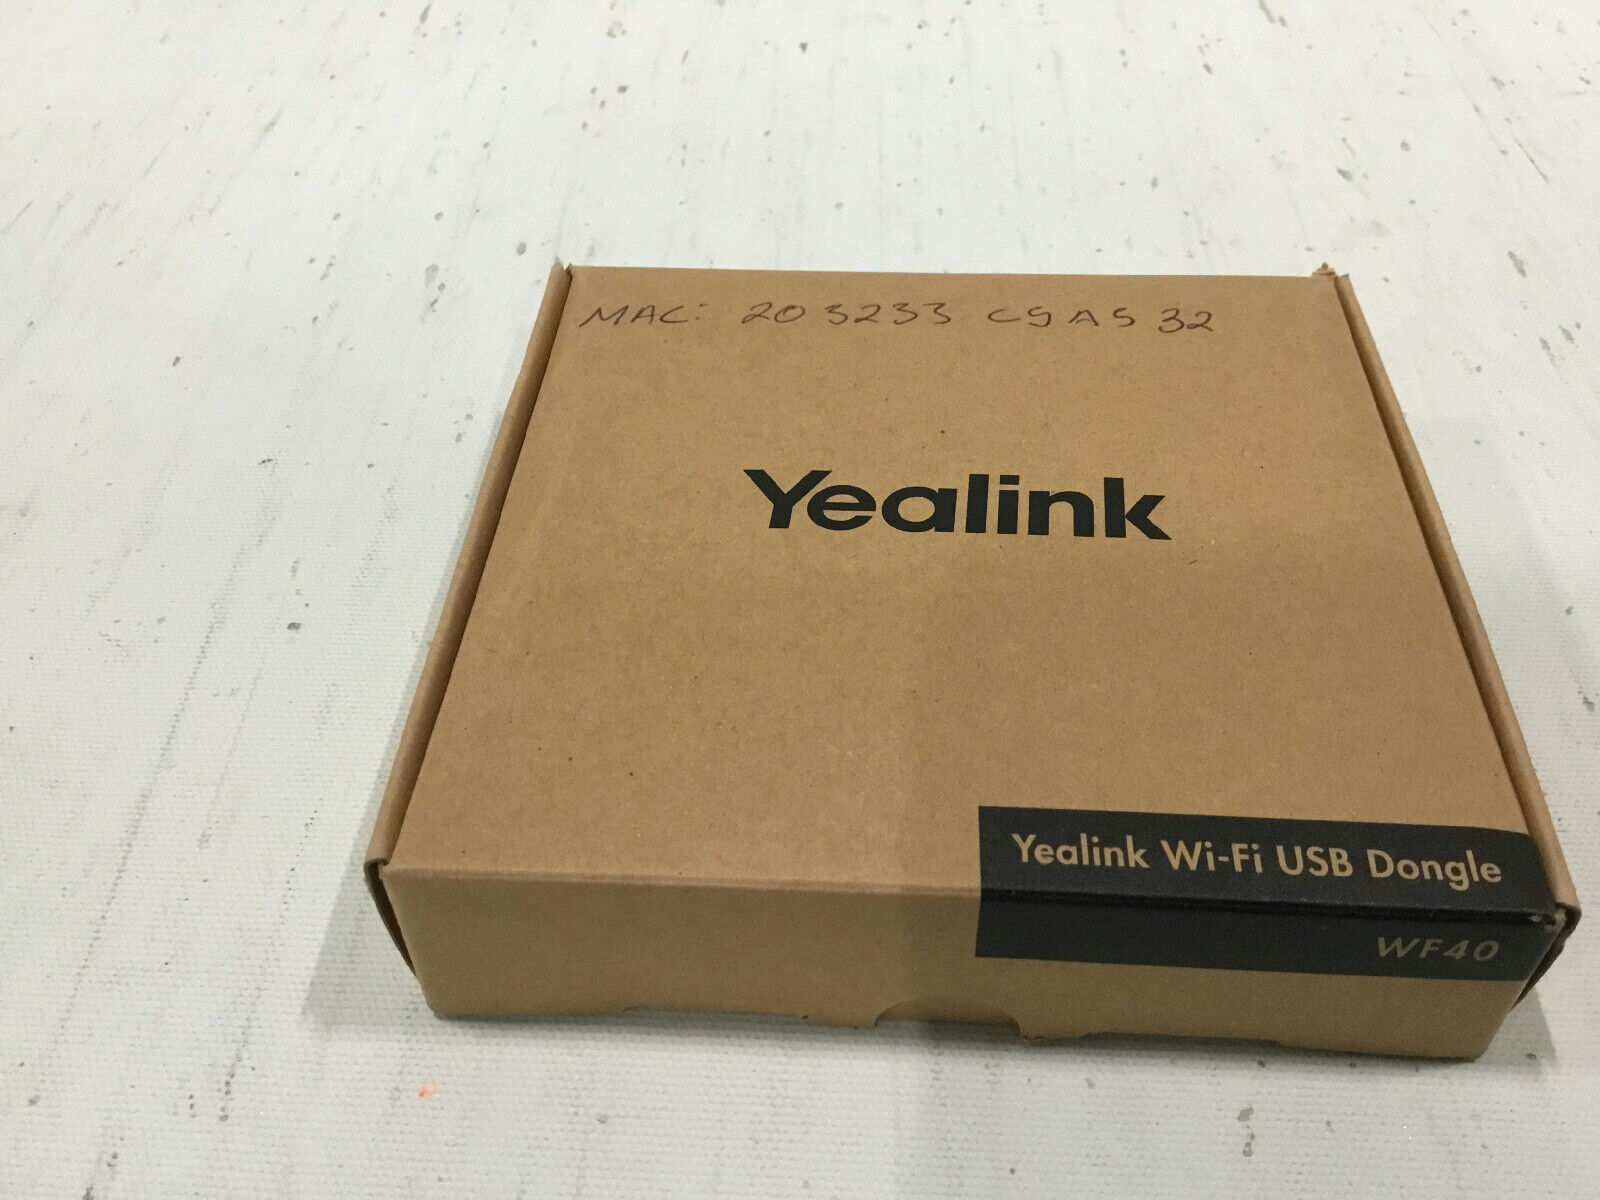 (Lot of 16) Yealink Wi-Fi USB Dongle WF40 - New